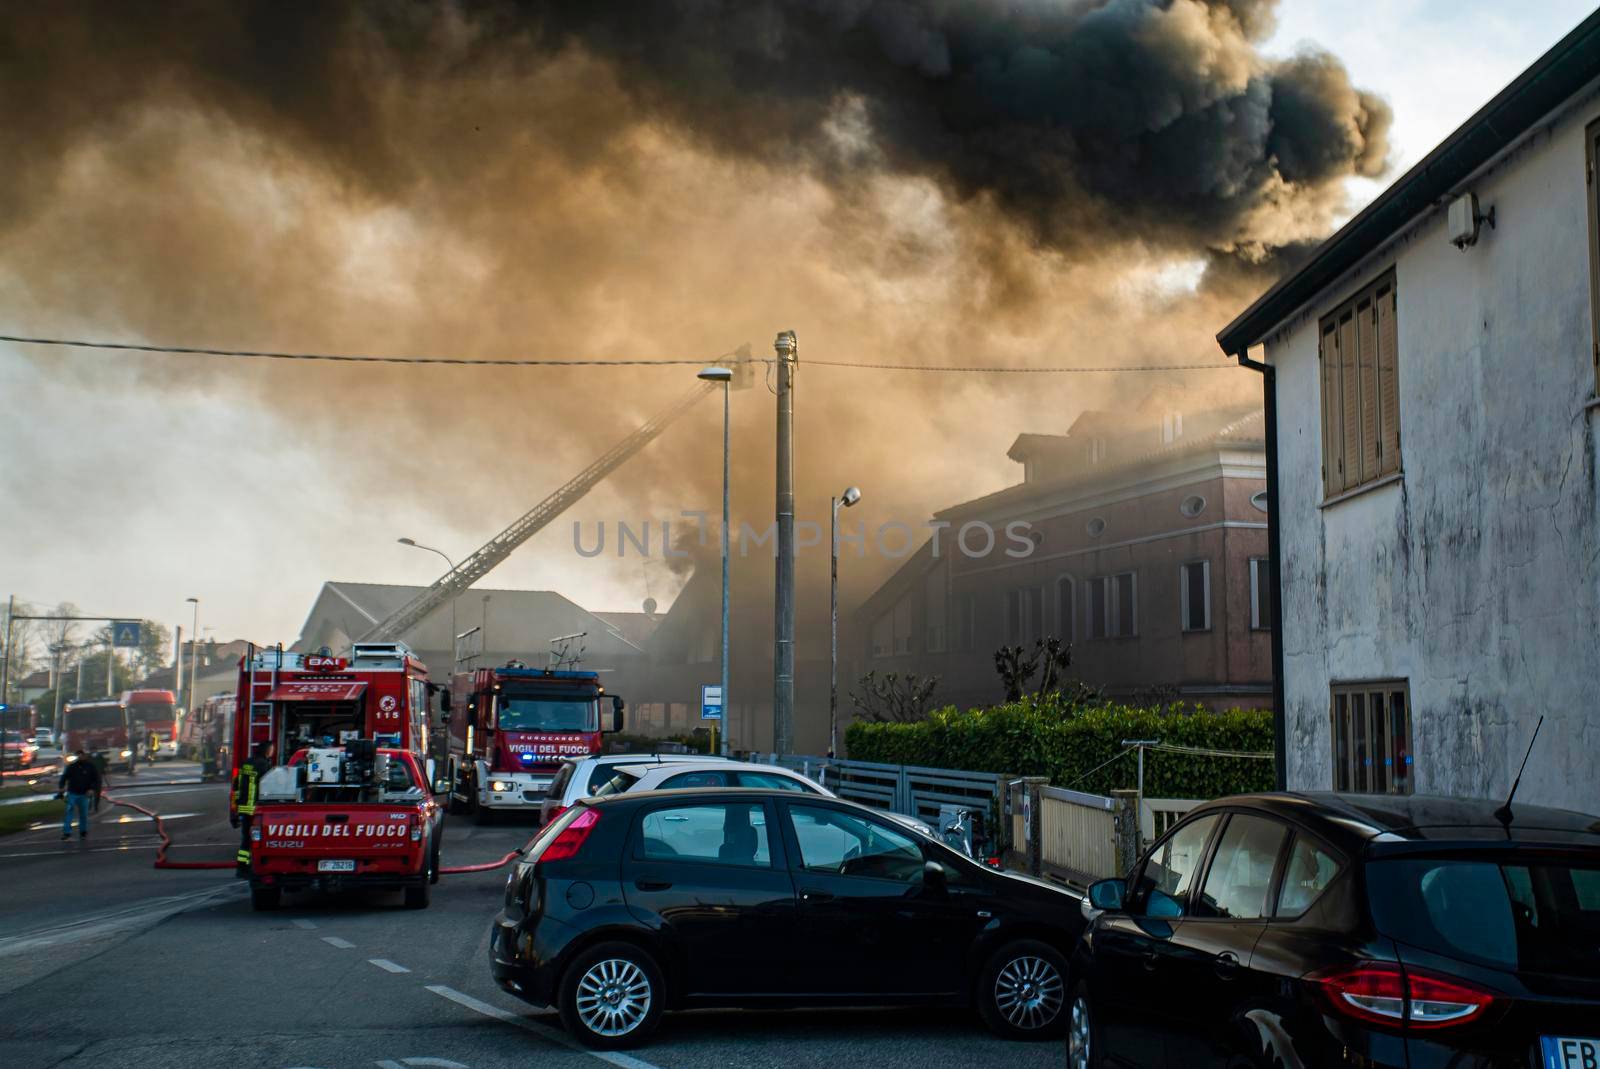 VILLANOVA DEL GHEBBO, ITALY 23 MARCH 2021: Fire house firefighters smoke